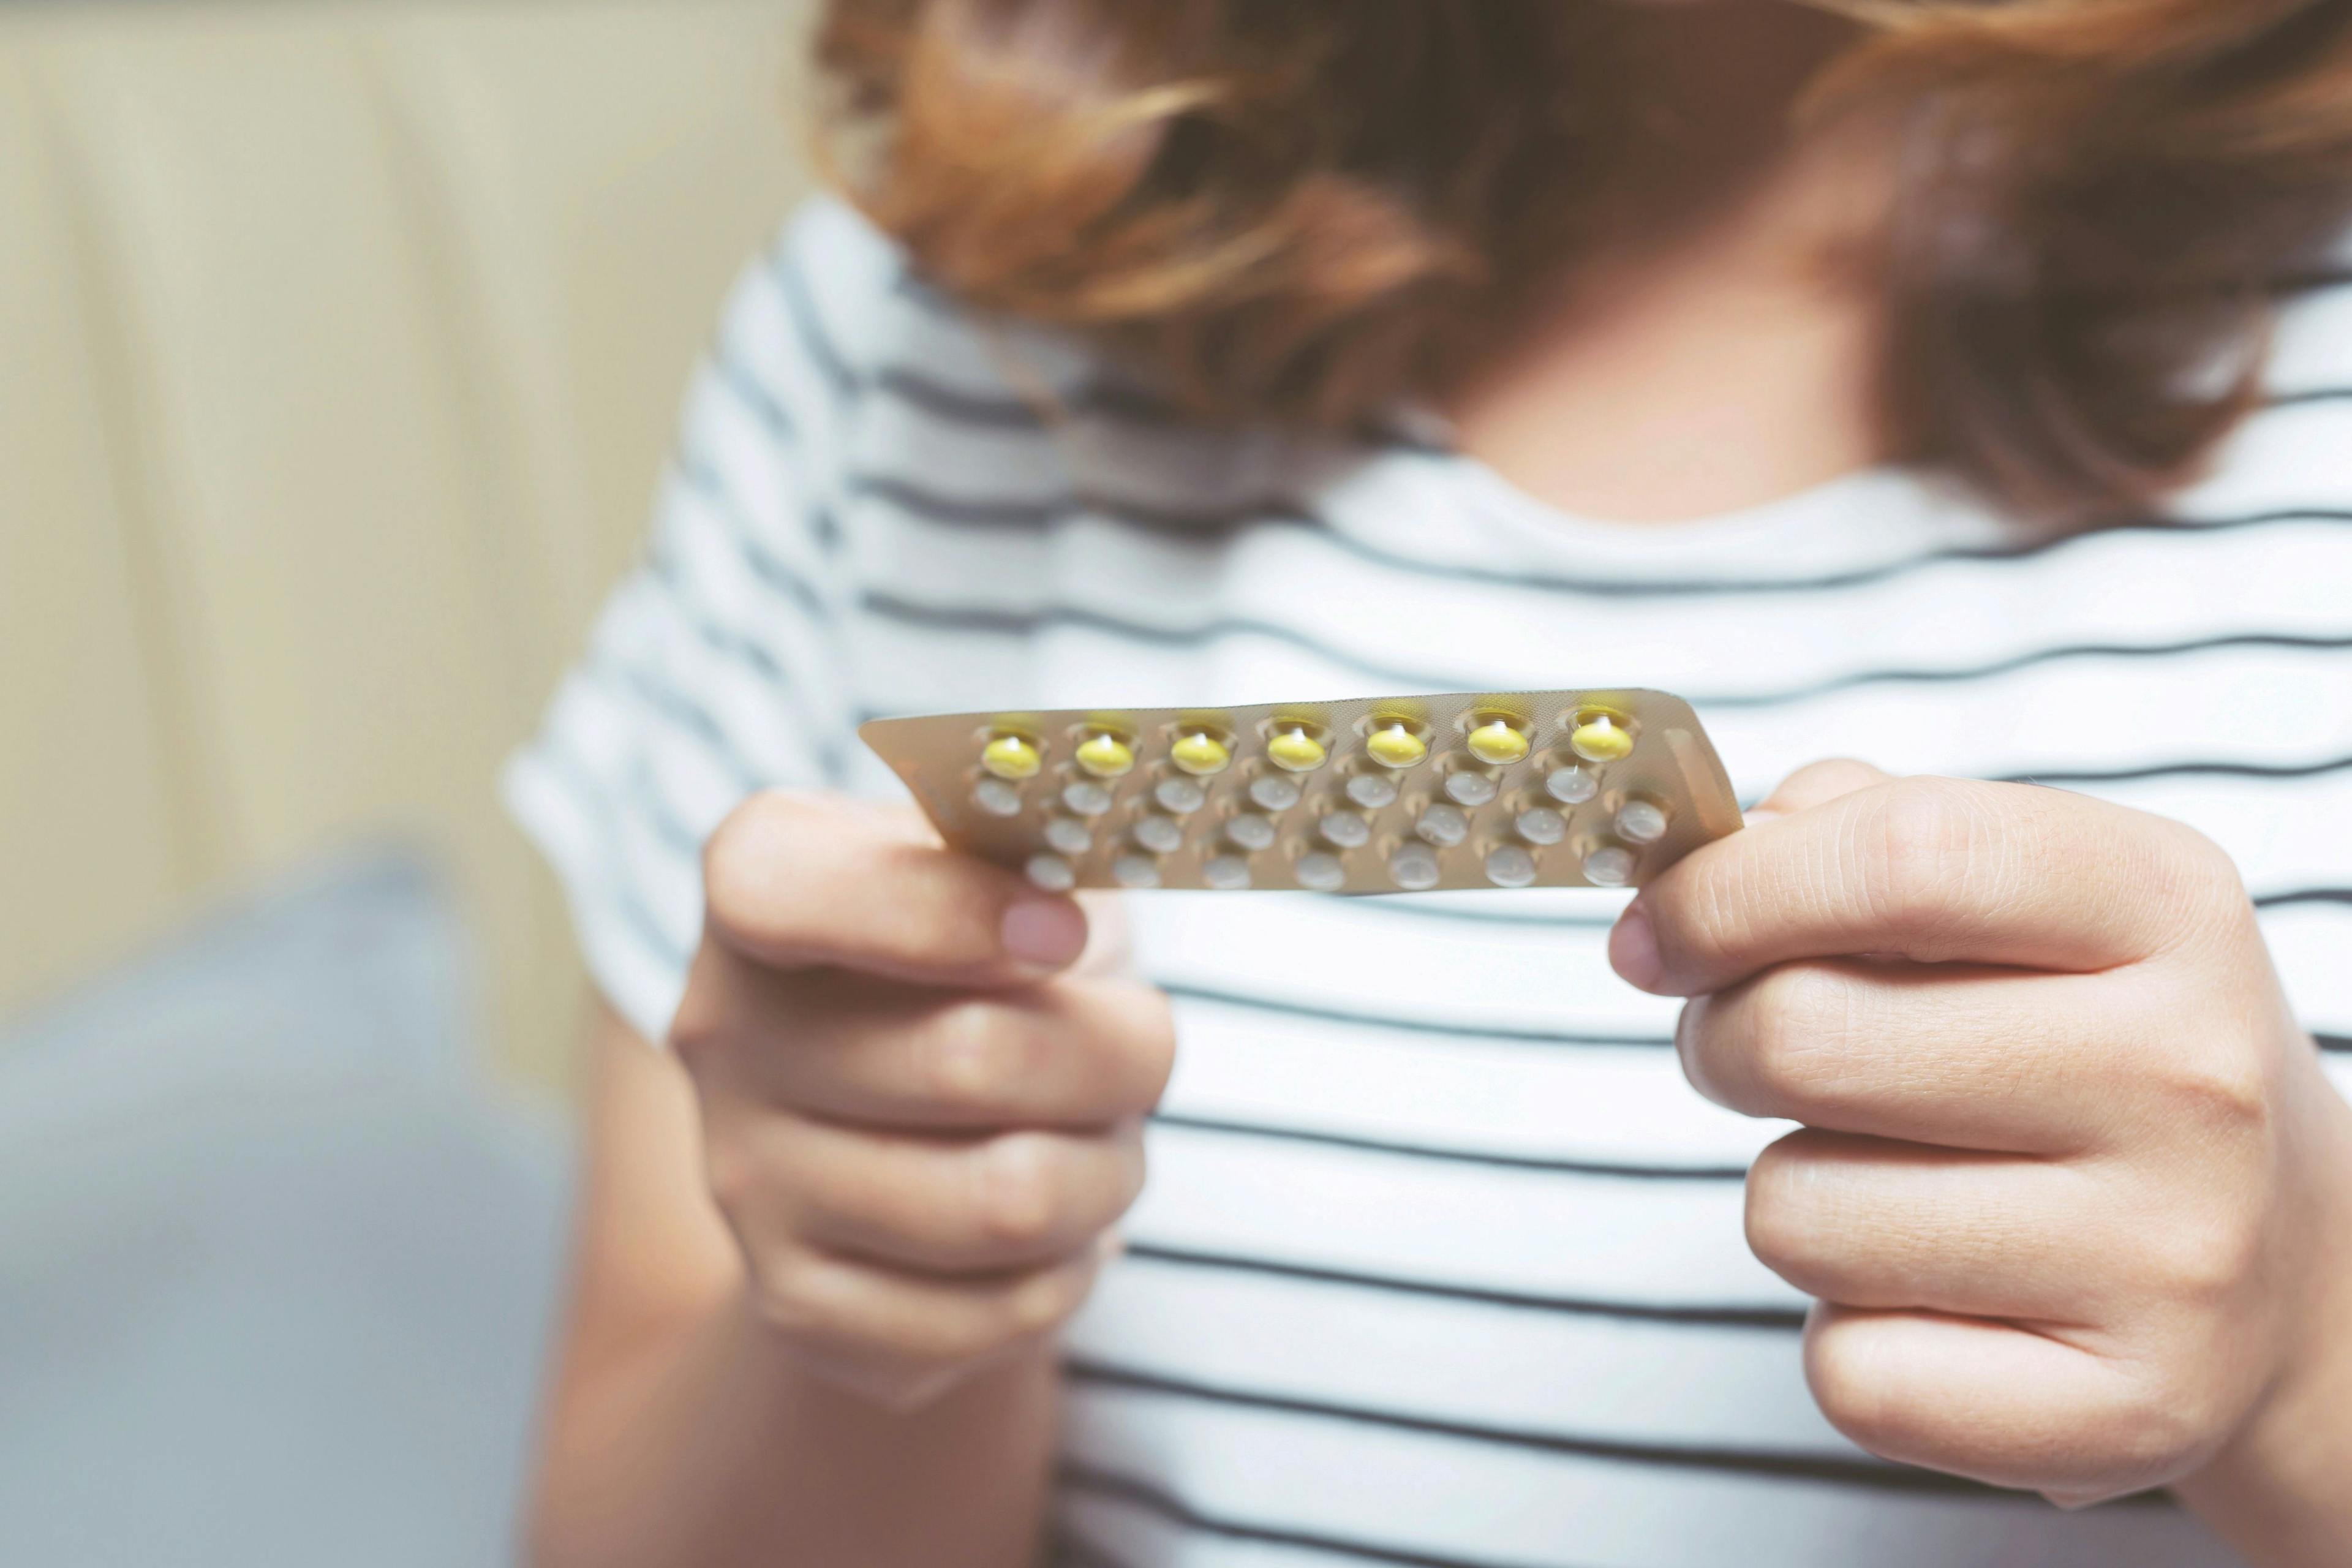 Woman holding birth control pills -- Image credit: methaphum | stock.adobe.com